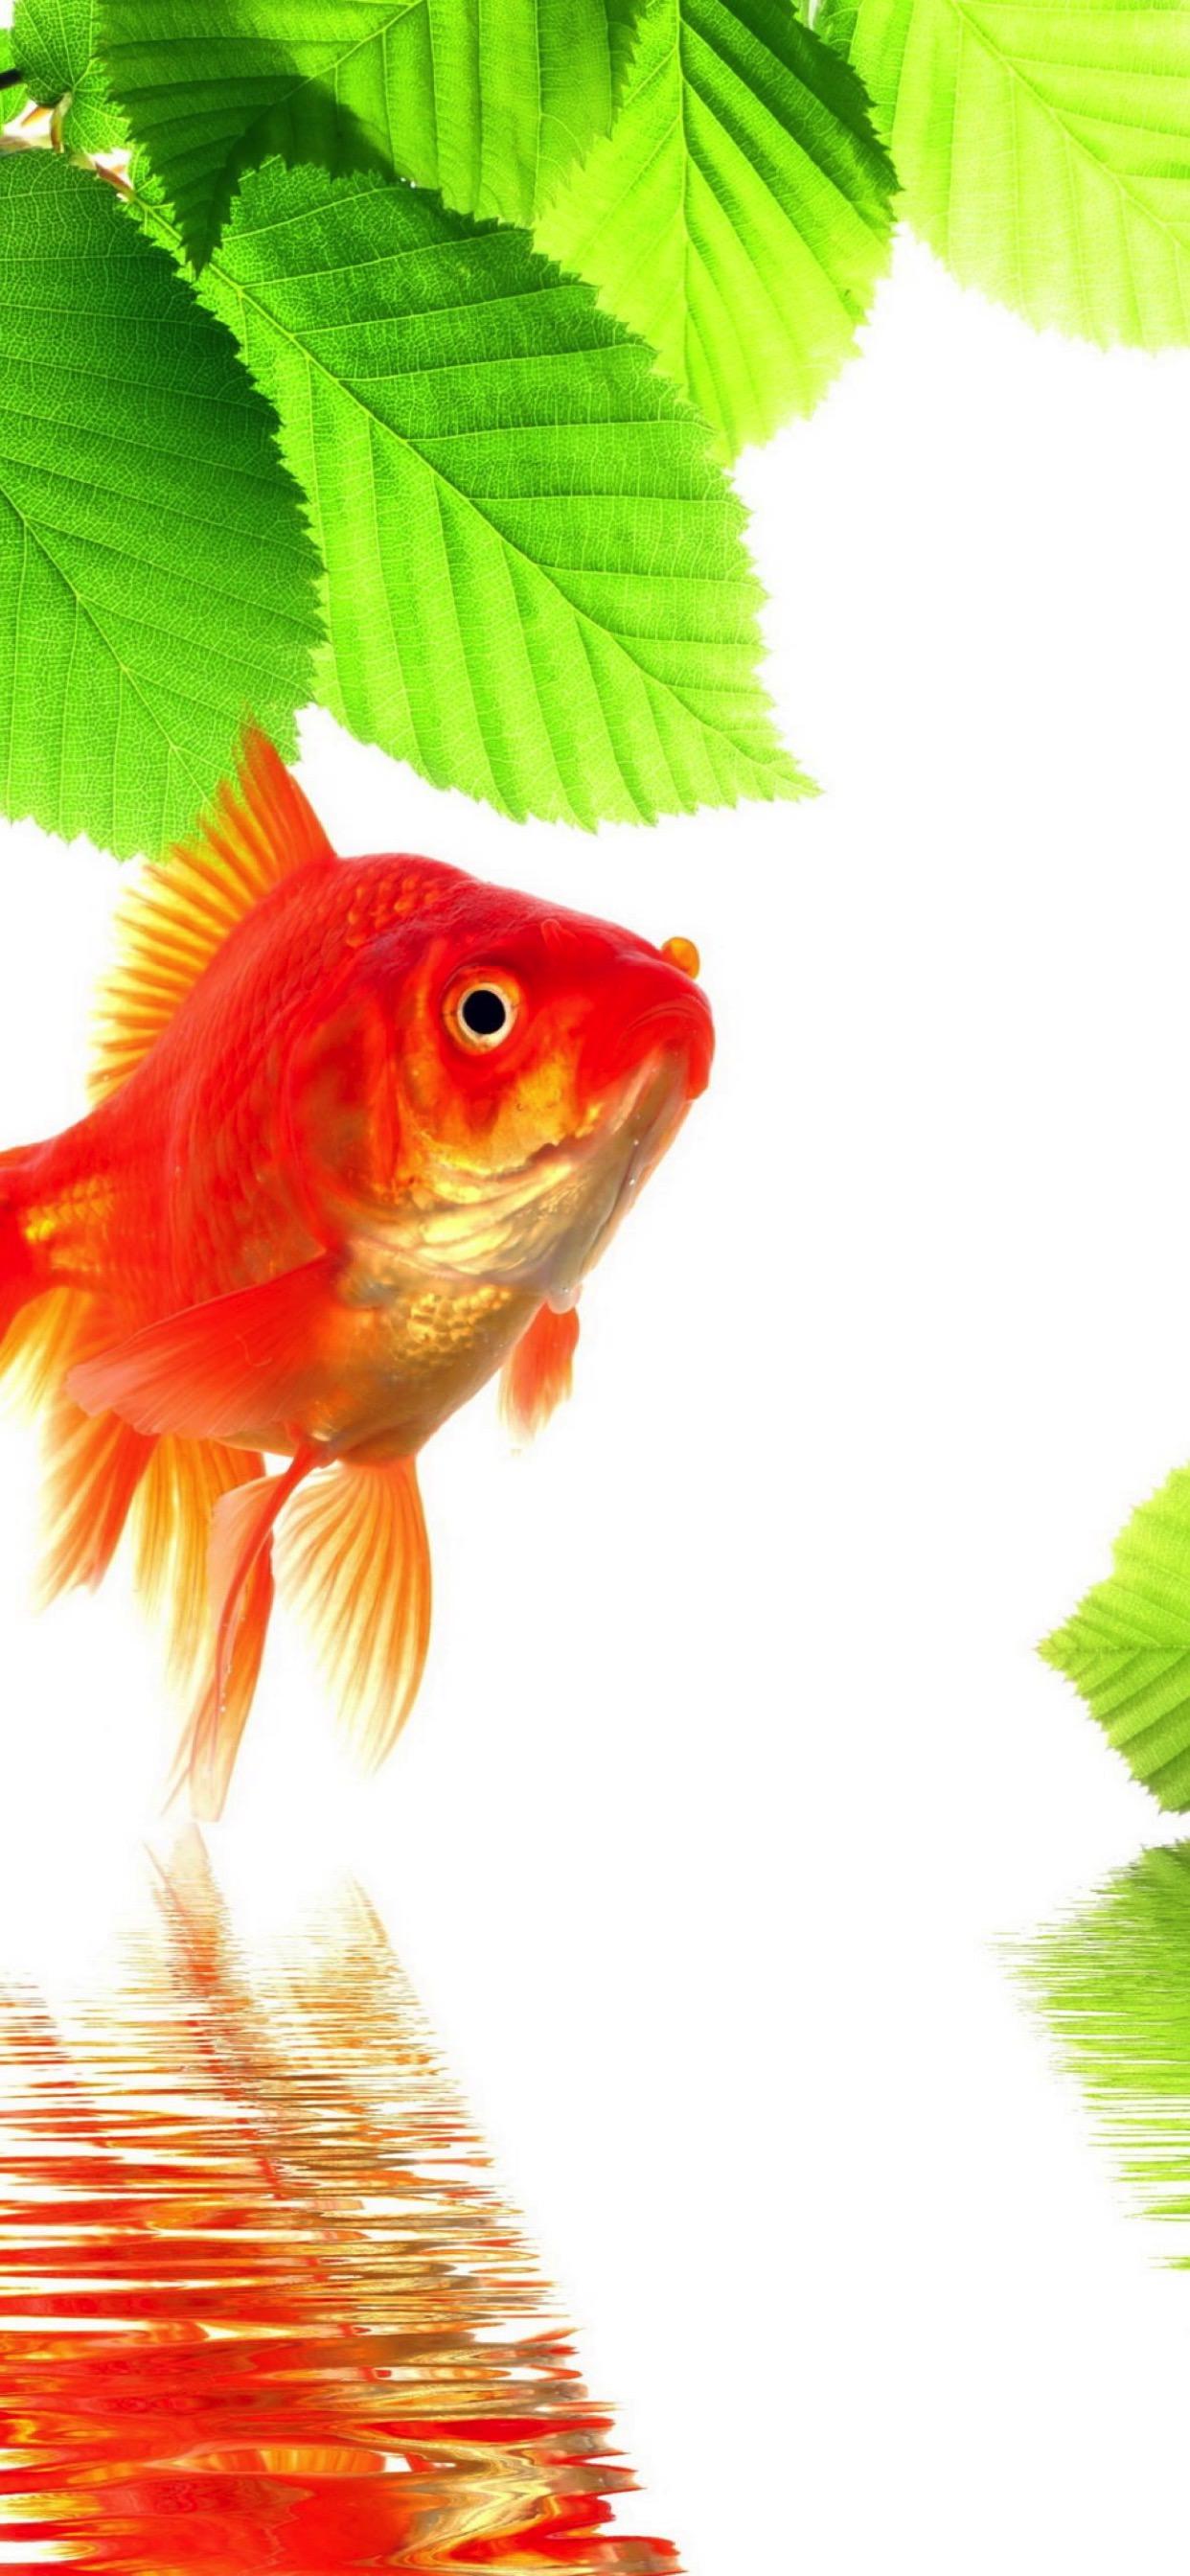 Goldfish green red. wallpaper.sc iPhone XS Max